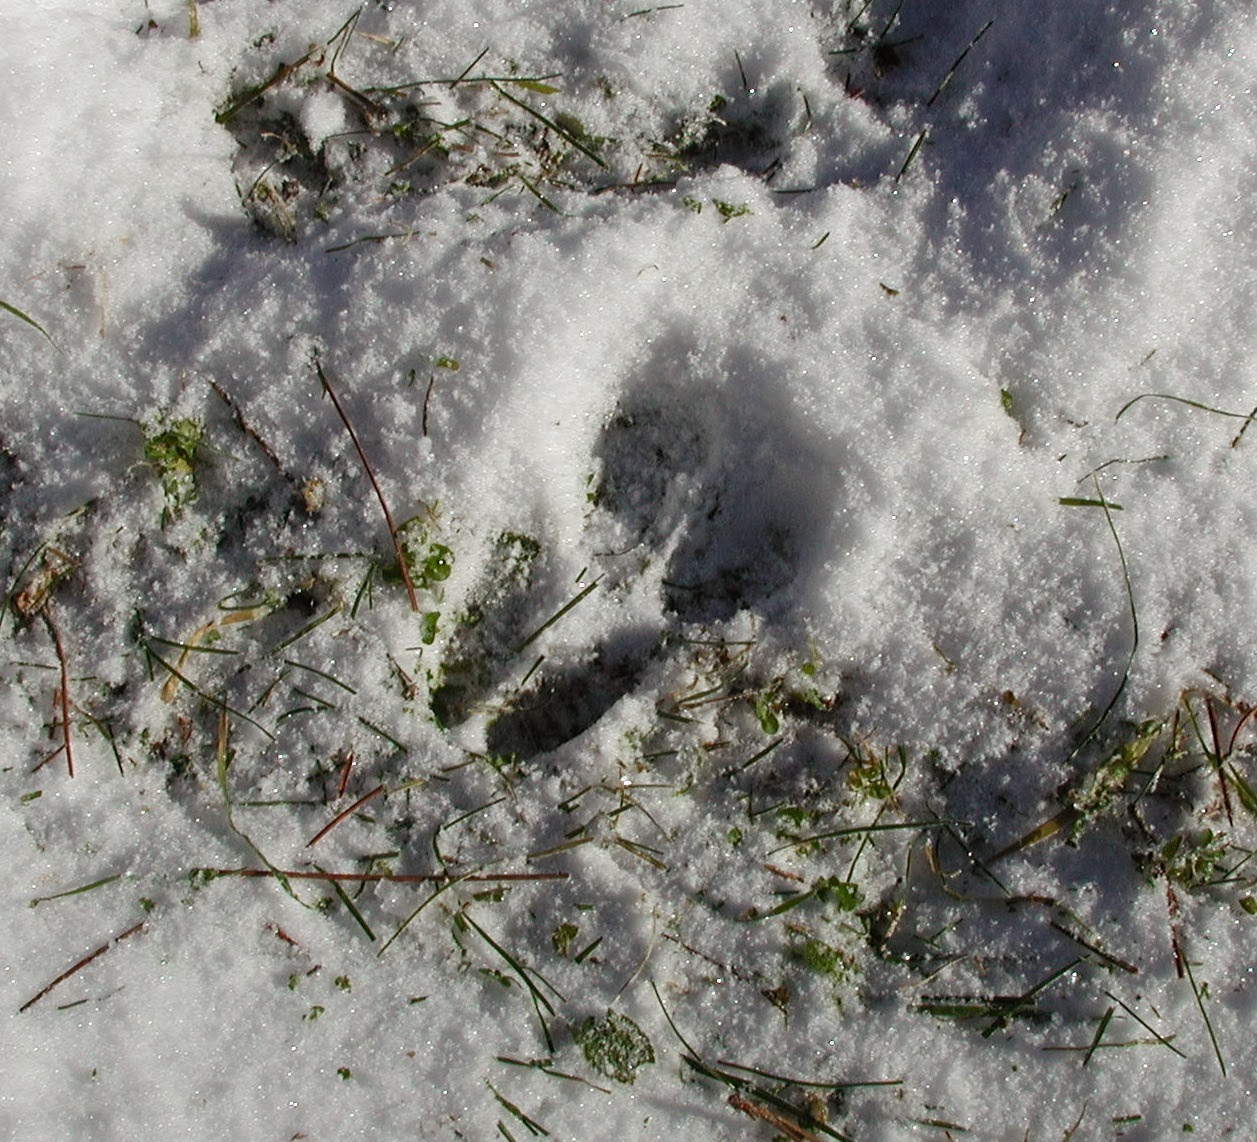 fern-glen-inn-seasons-and-reasons-deer-tracks